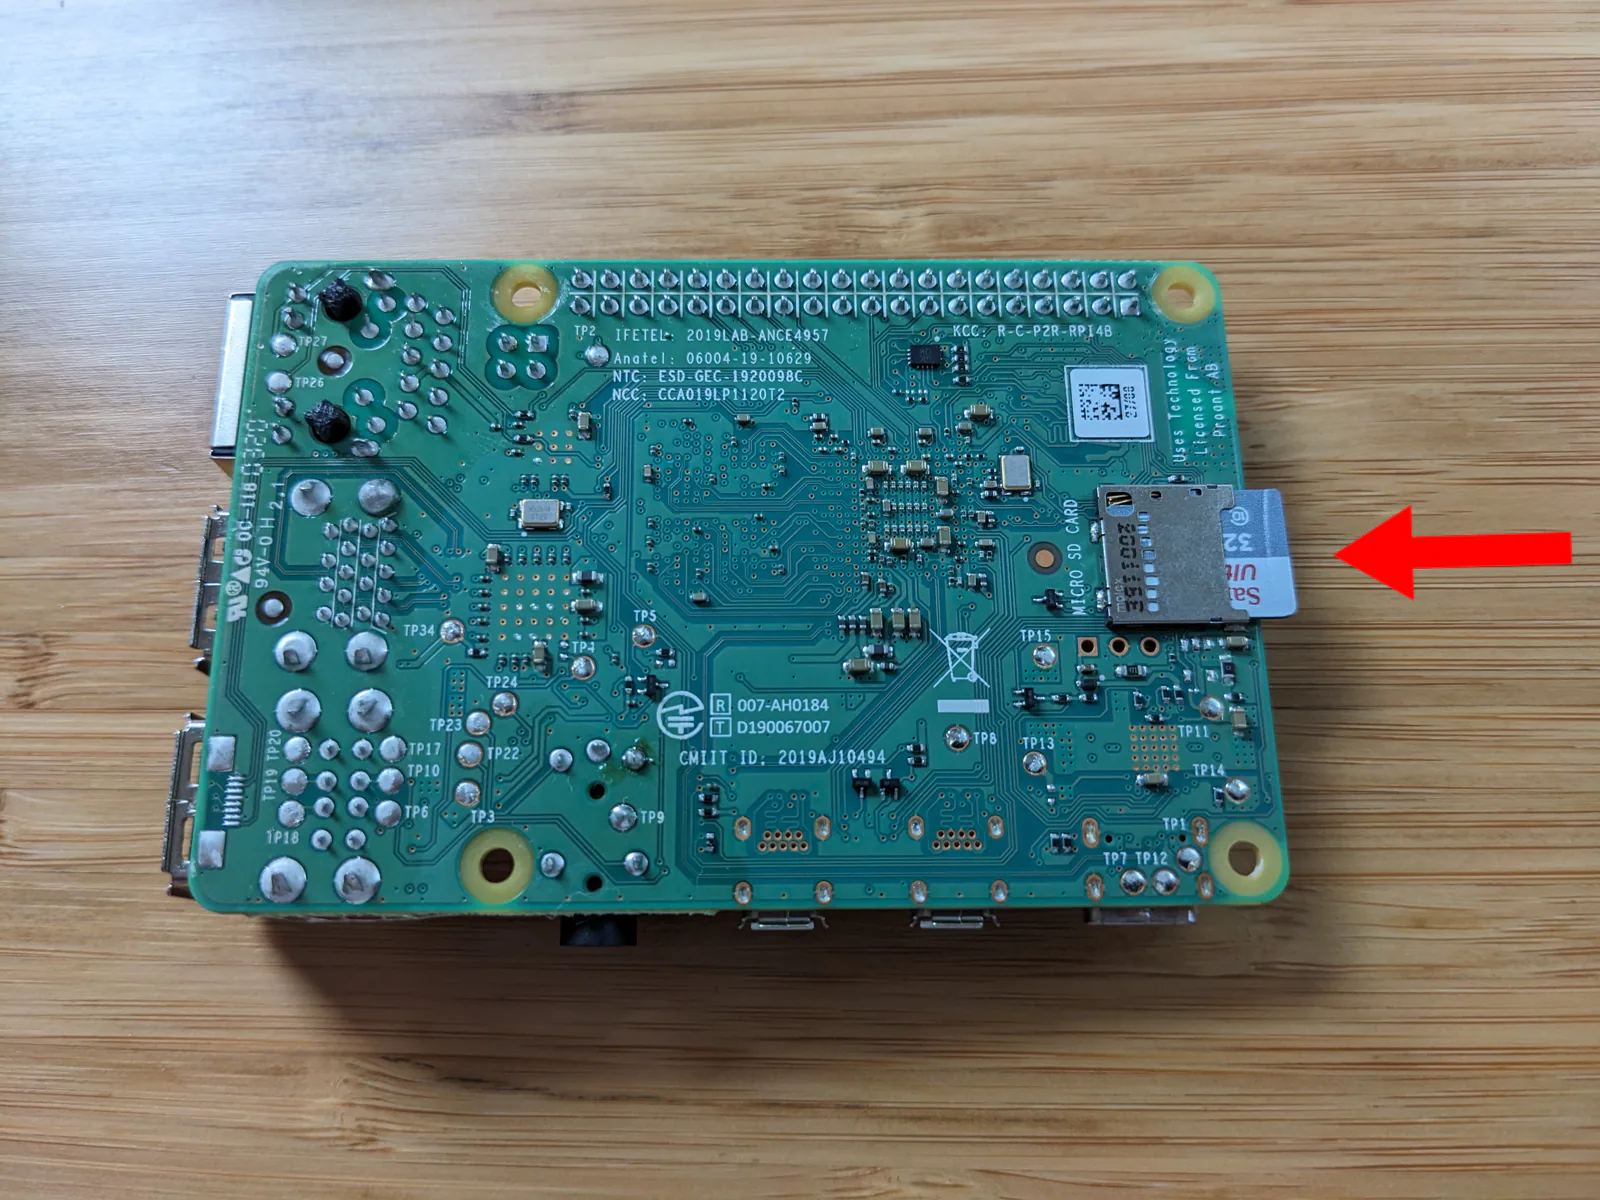 Photo of microSD inserted into microSD slot of Raspberry Pi